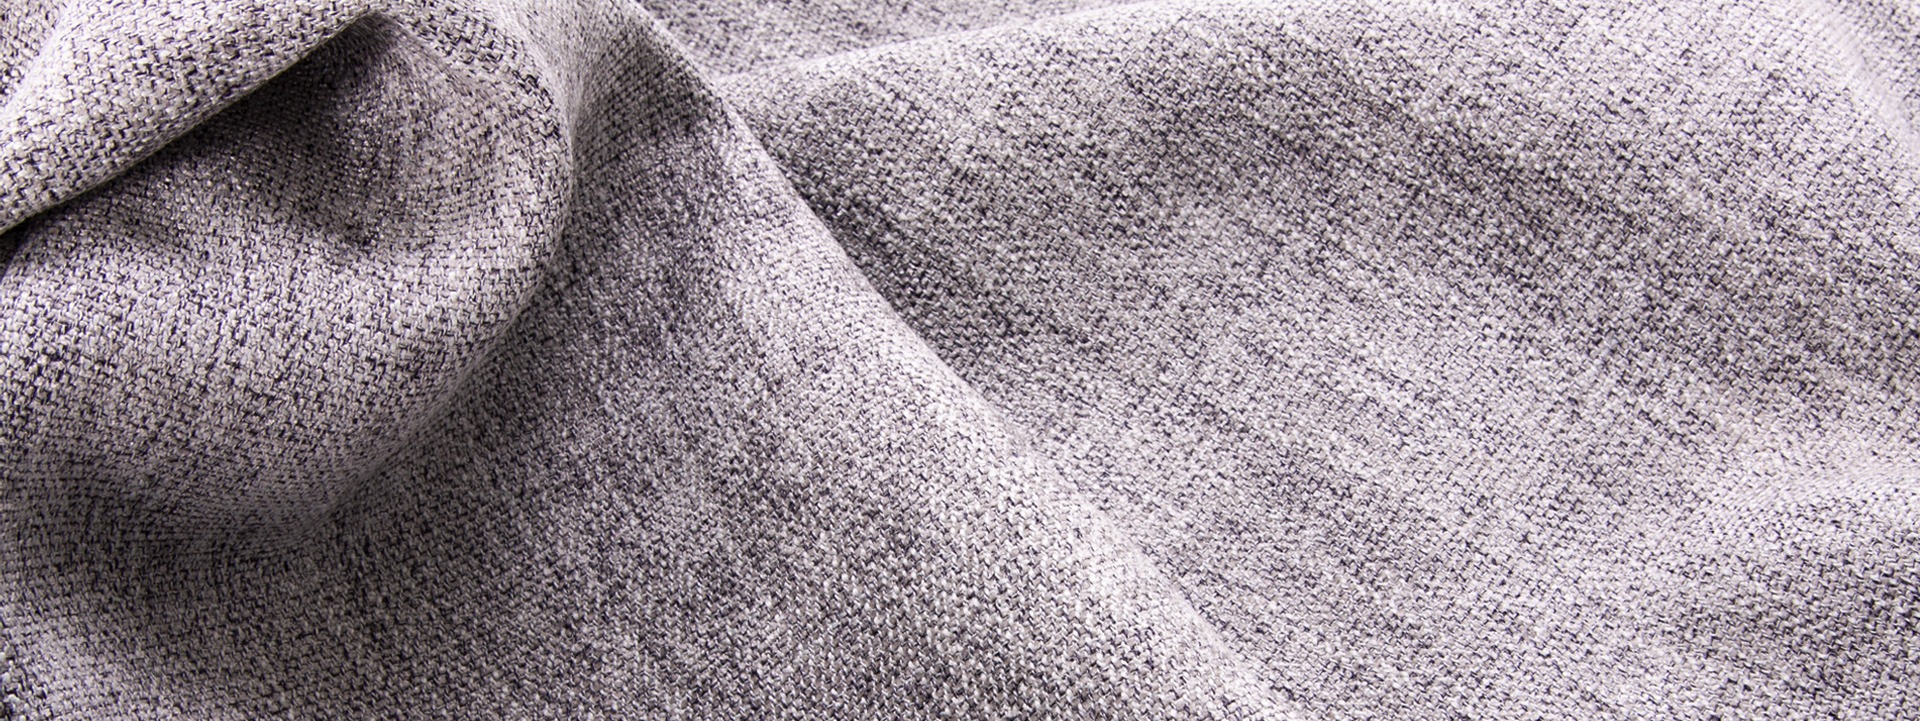  Homespun Yarn – 185 Yard Acrylic-Polyester Blend